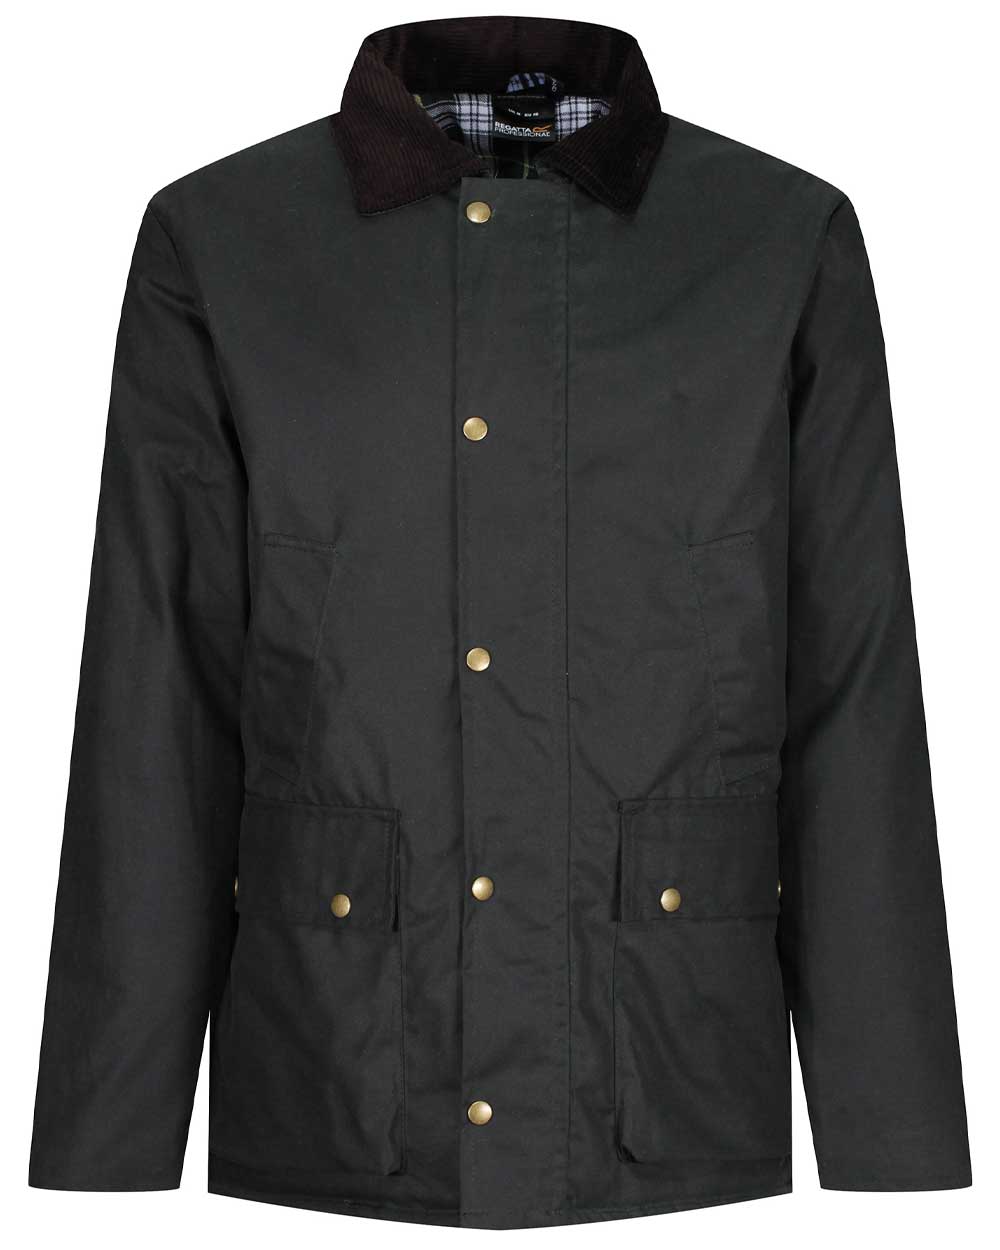 Regatta Pensford Insulated Wax Jacket in Dark Khaki 